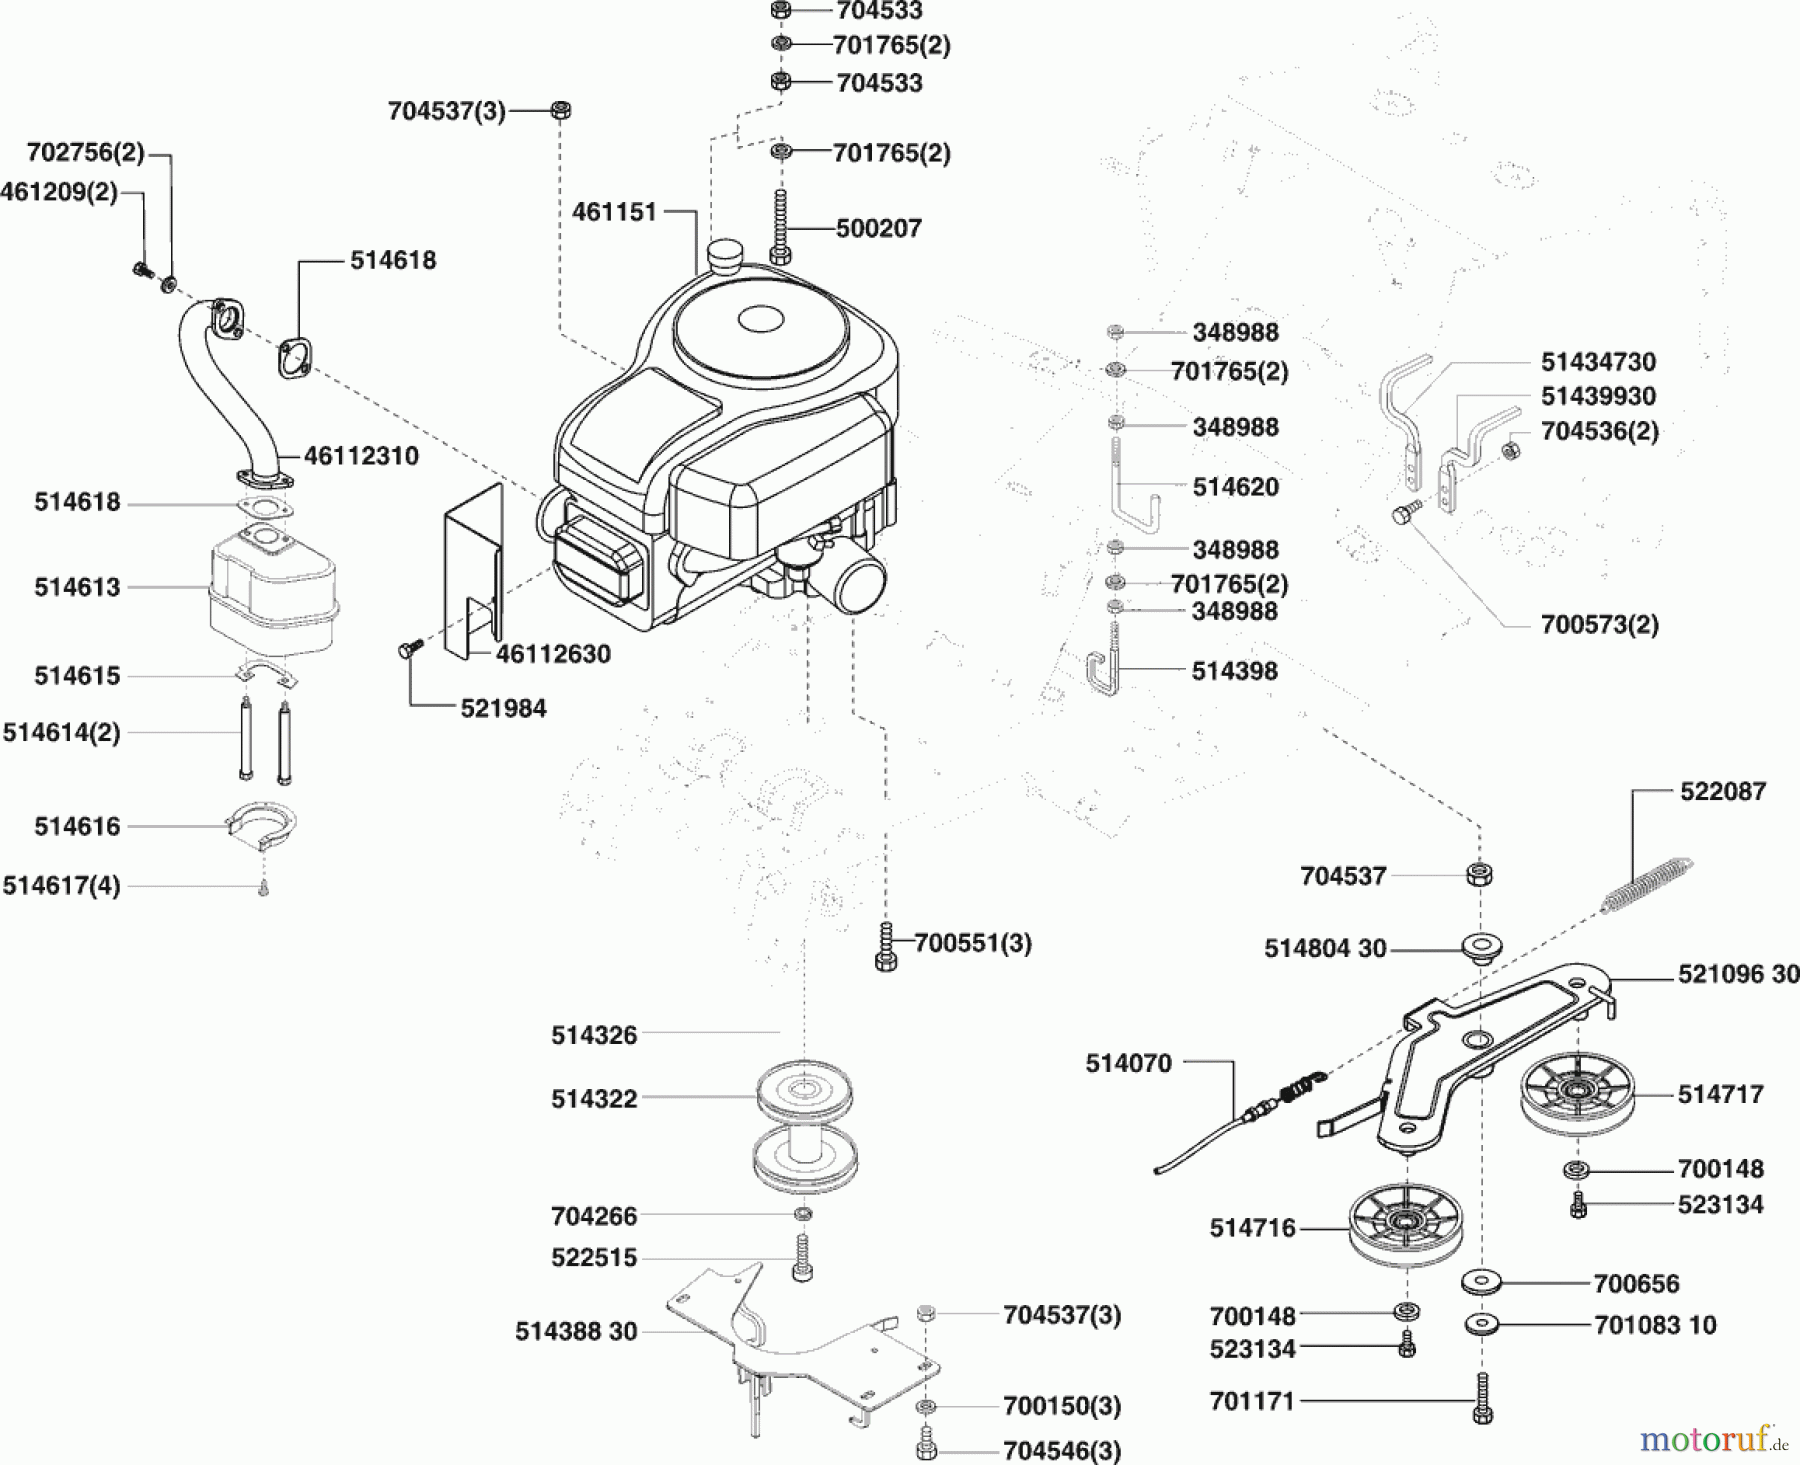  AL-KO Gartentechnik Rasentraktor Comfort T 750 ab 11/2003 Seite 4